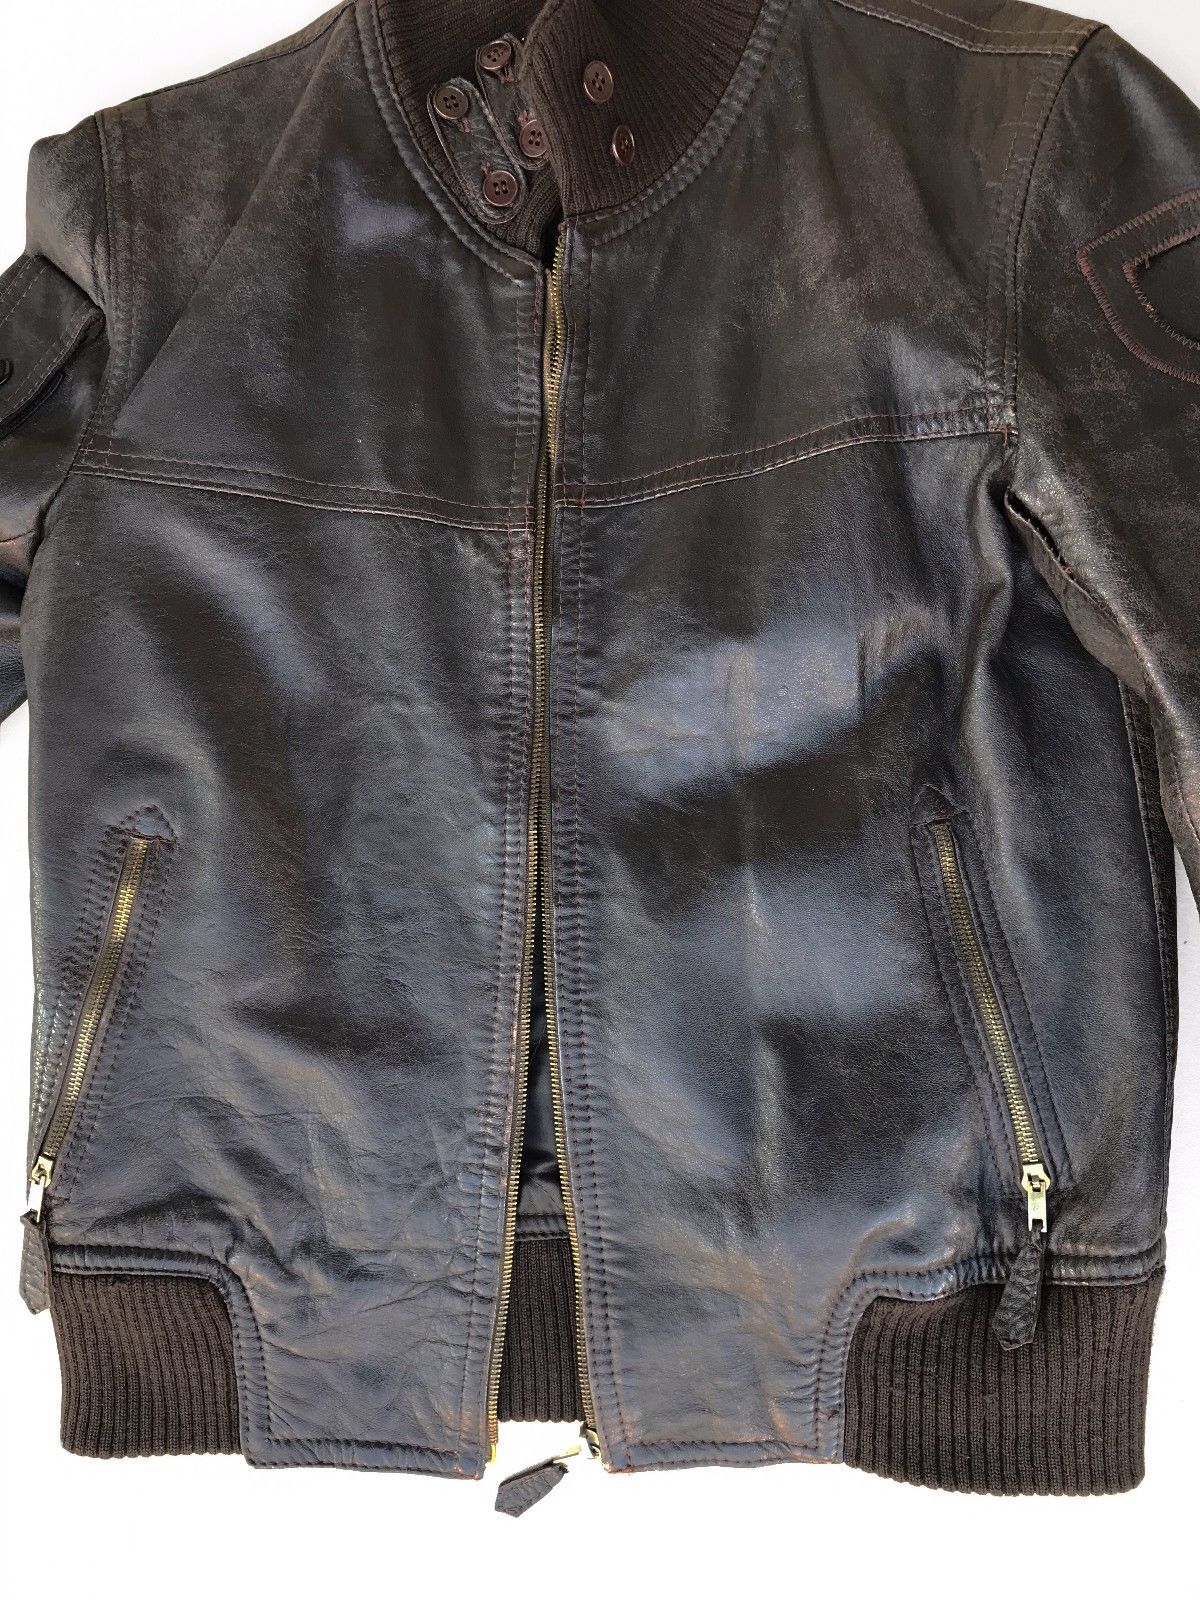 Yugoslav Air Force leather flight jacket | Vintage Leather Jackets Forum